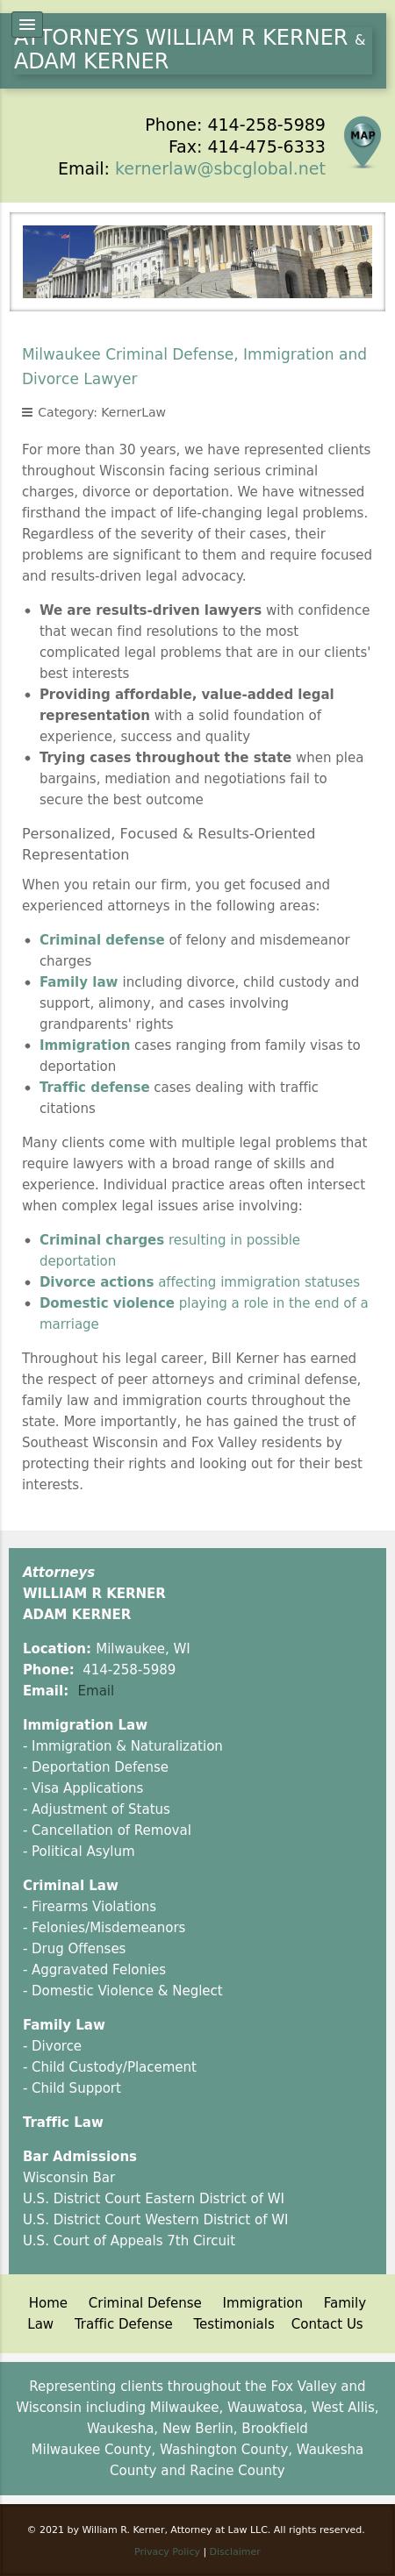 William R. Kerner, Attorney at Law LLC - Milwaukee WI Lawyers